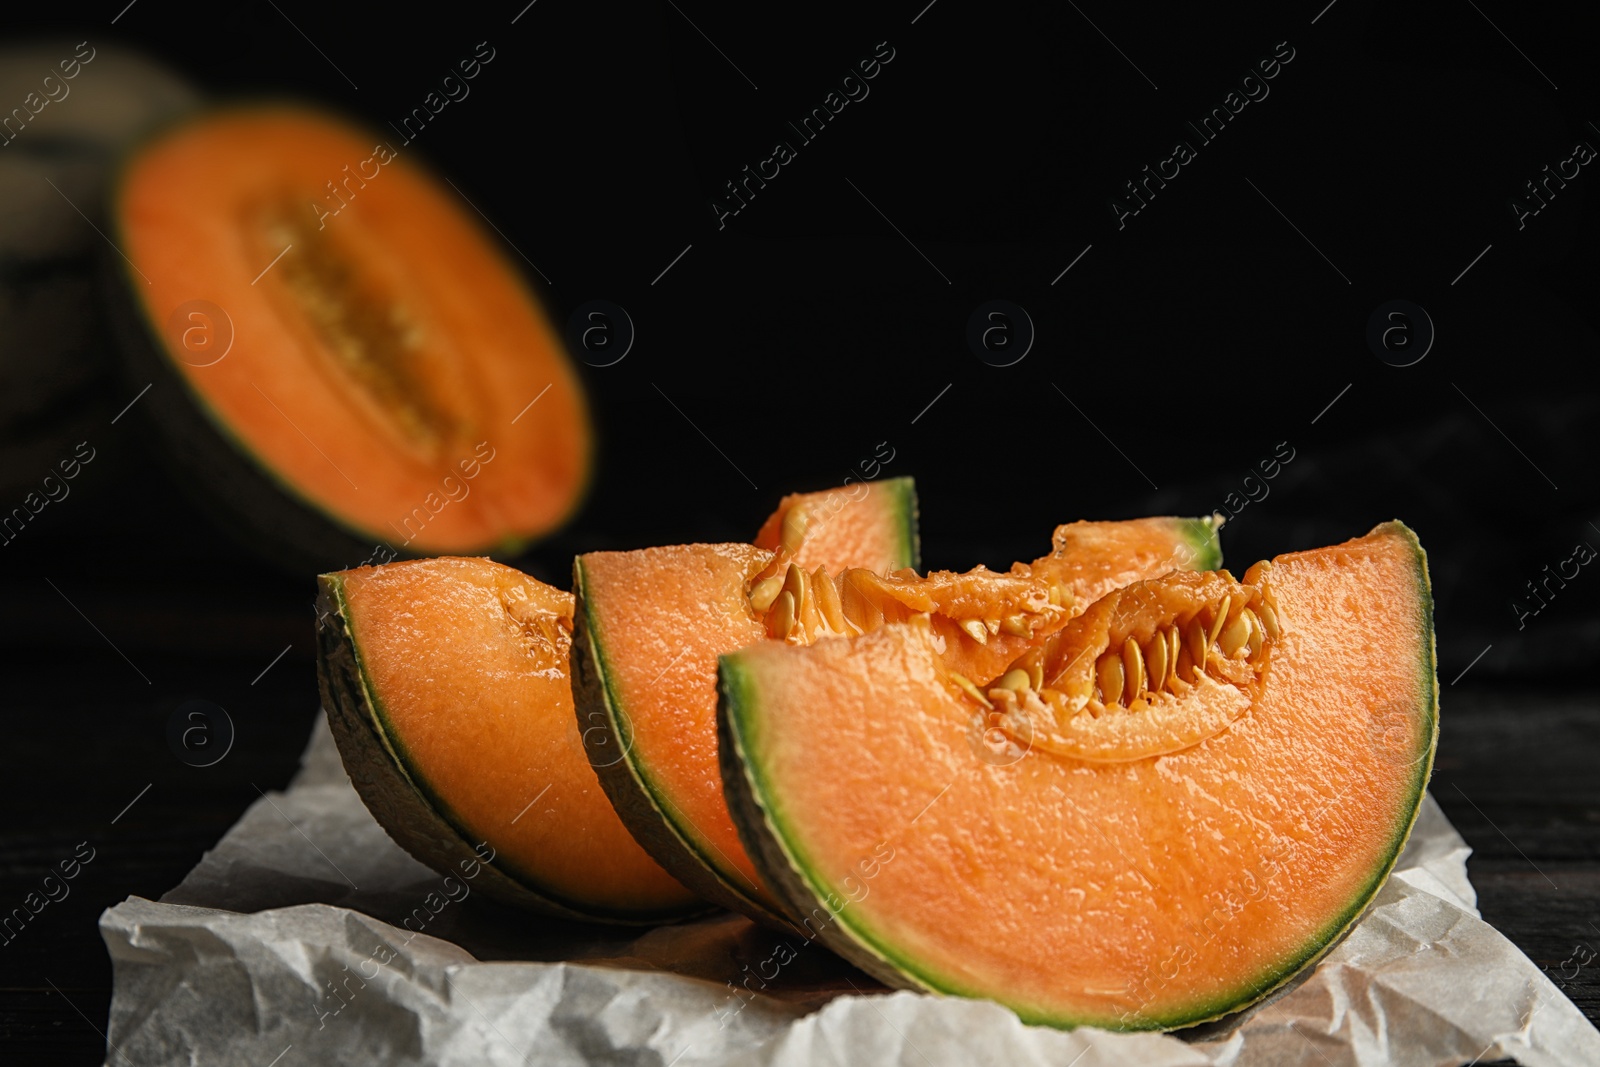 Photo of Slices of ripe cantaloupe melon on dark table